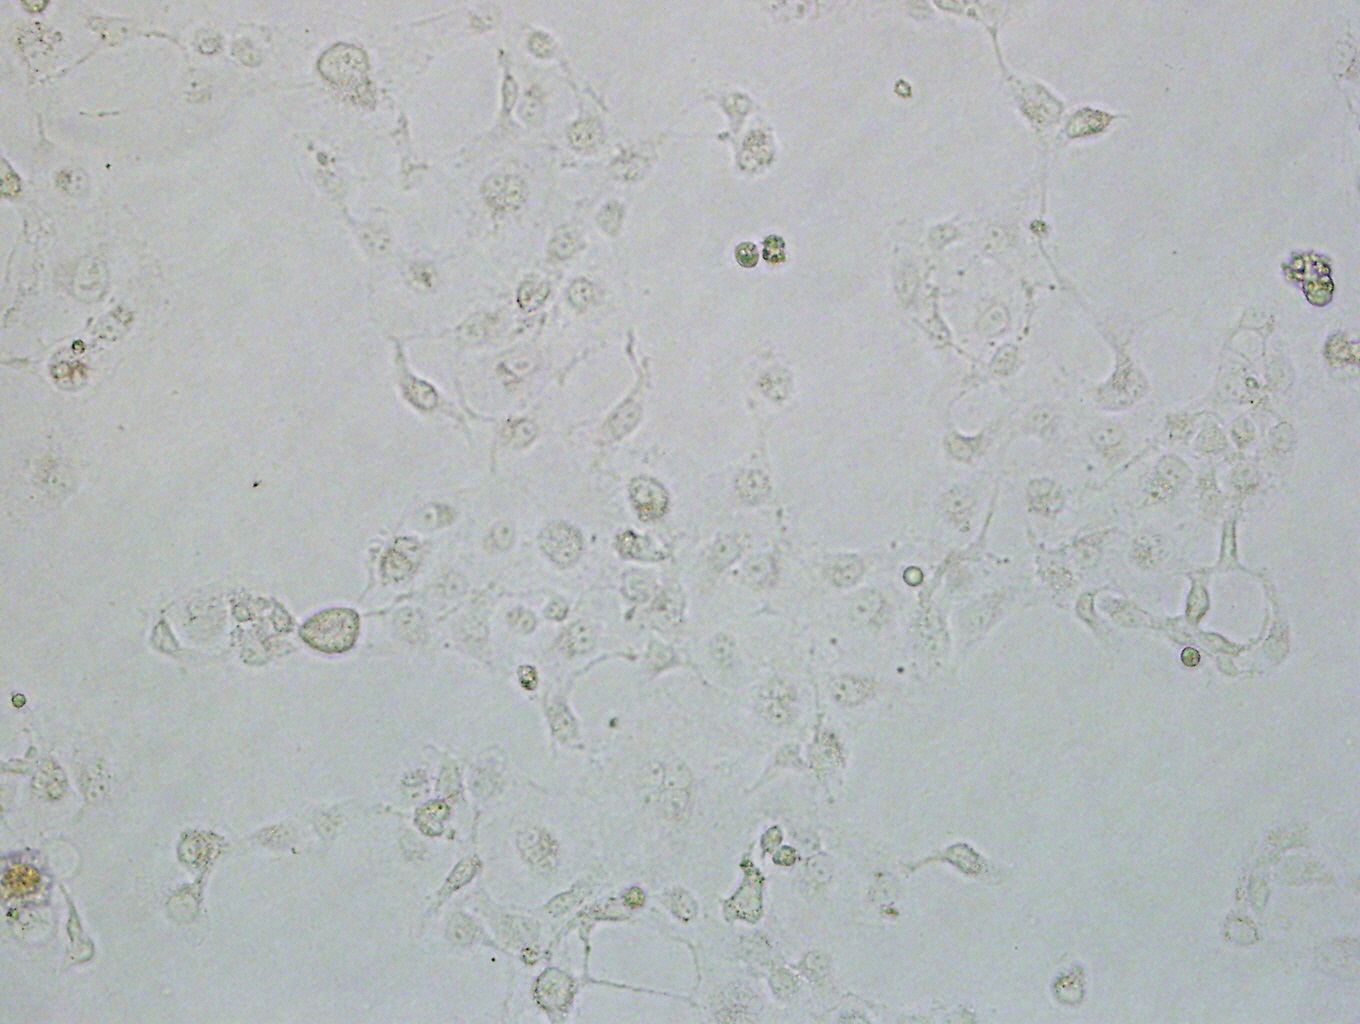 COS-7细胞非洲绿猴SV40转化肾细胞